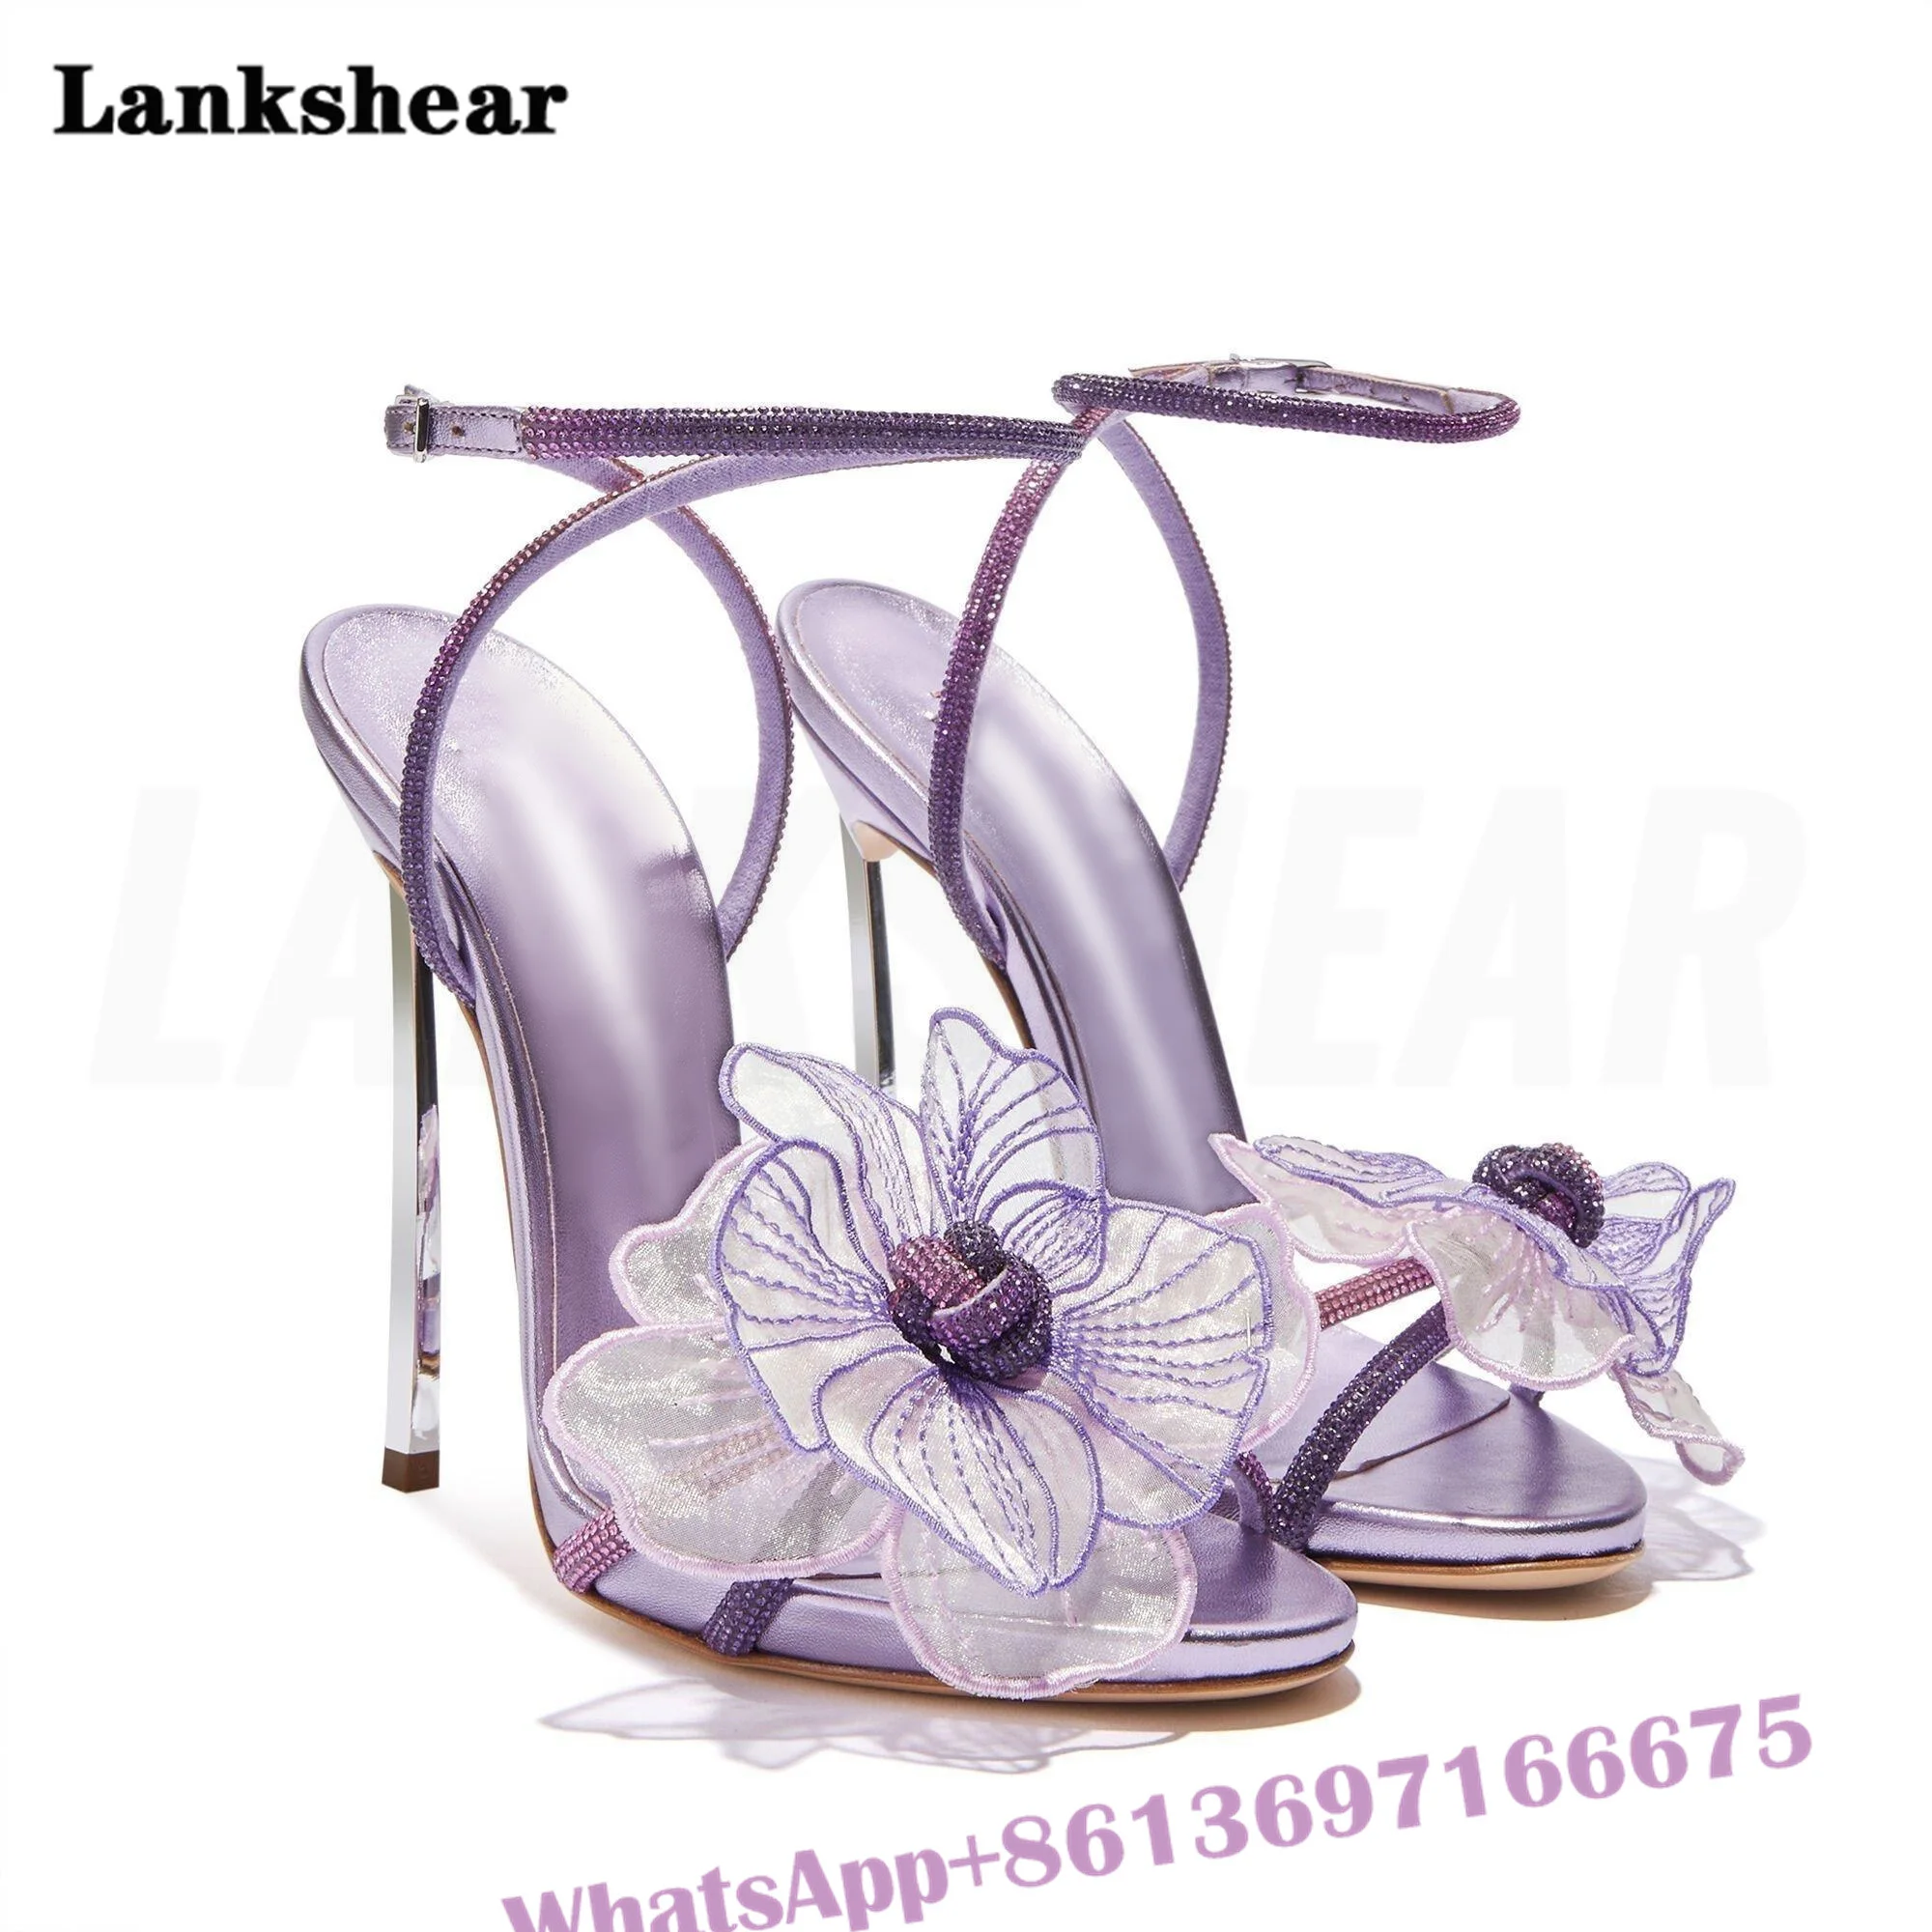 Prada Women's Purple Suede Leather T-Strap High Heel Pumps Shoes